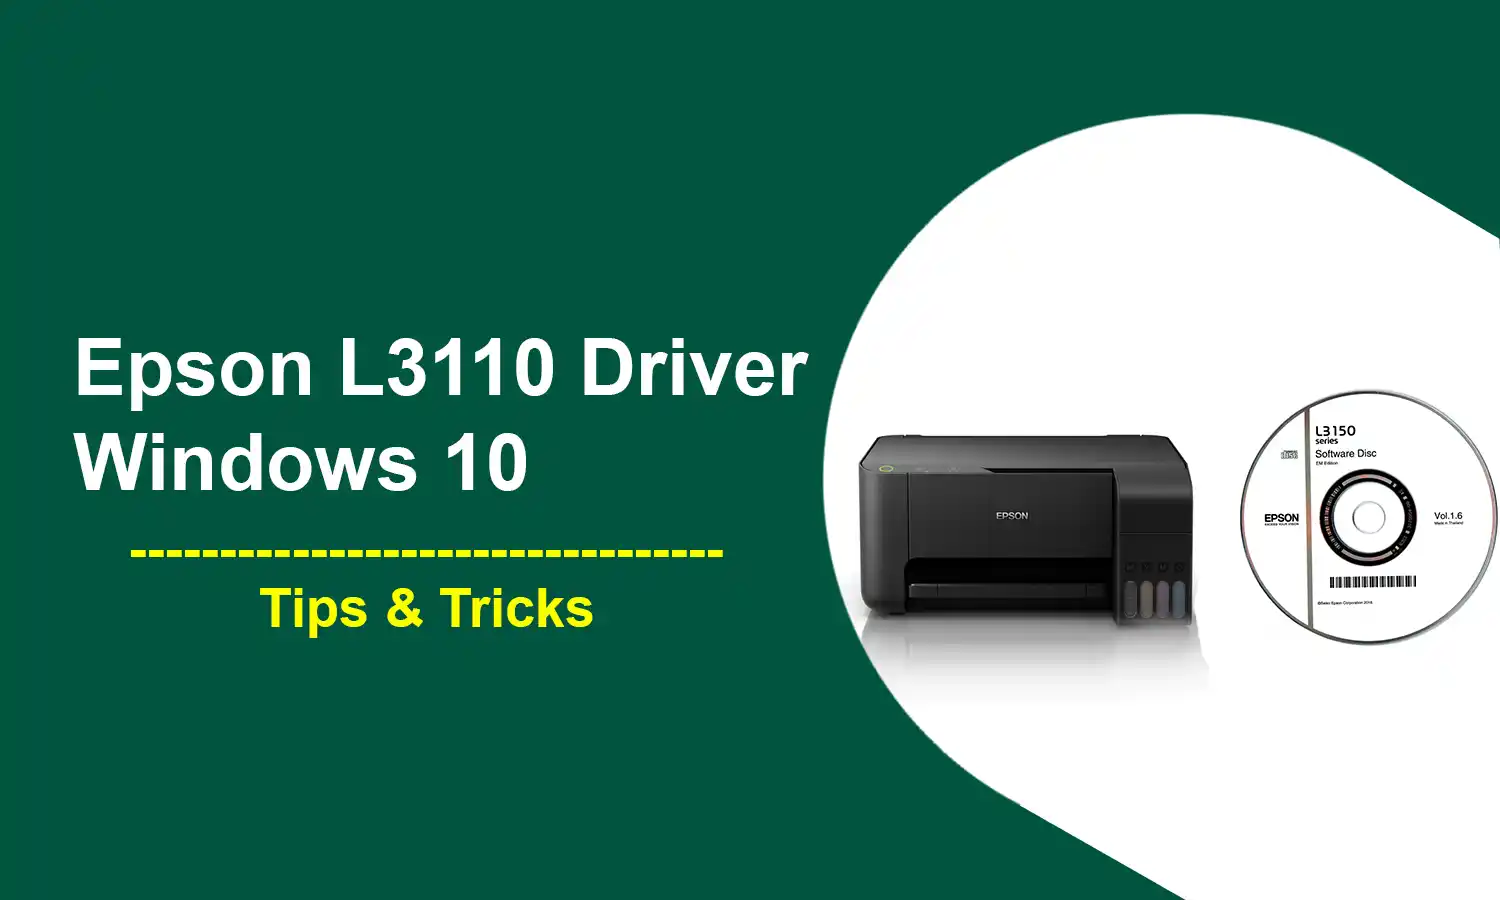 Epson L3110 Driver Windows 10